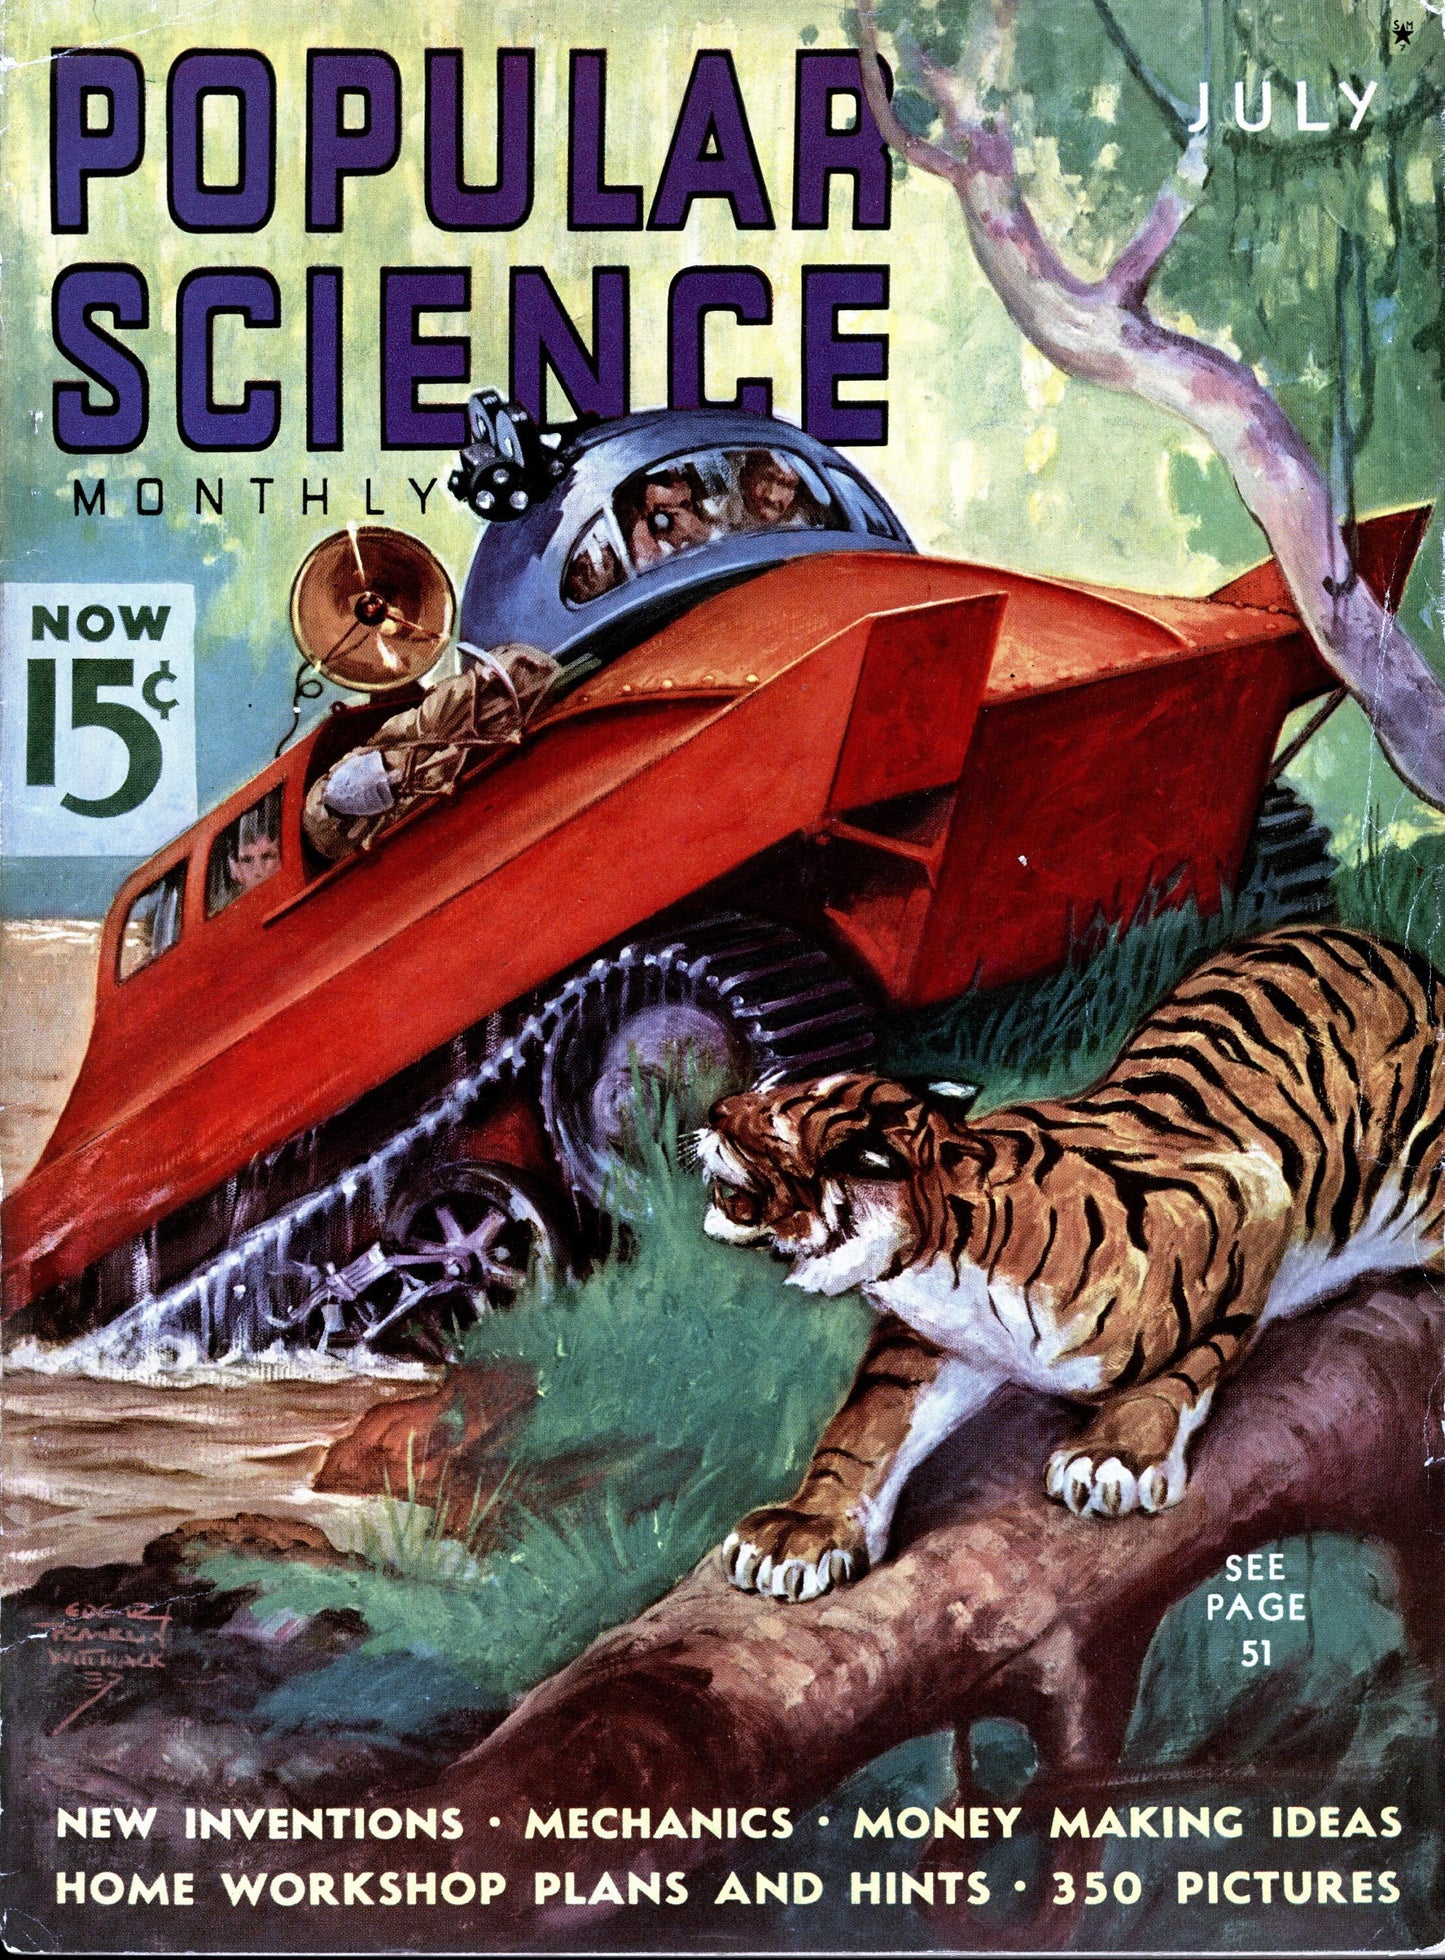 Vintage Sci fi comic poster "Popular Science 1937" (229)